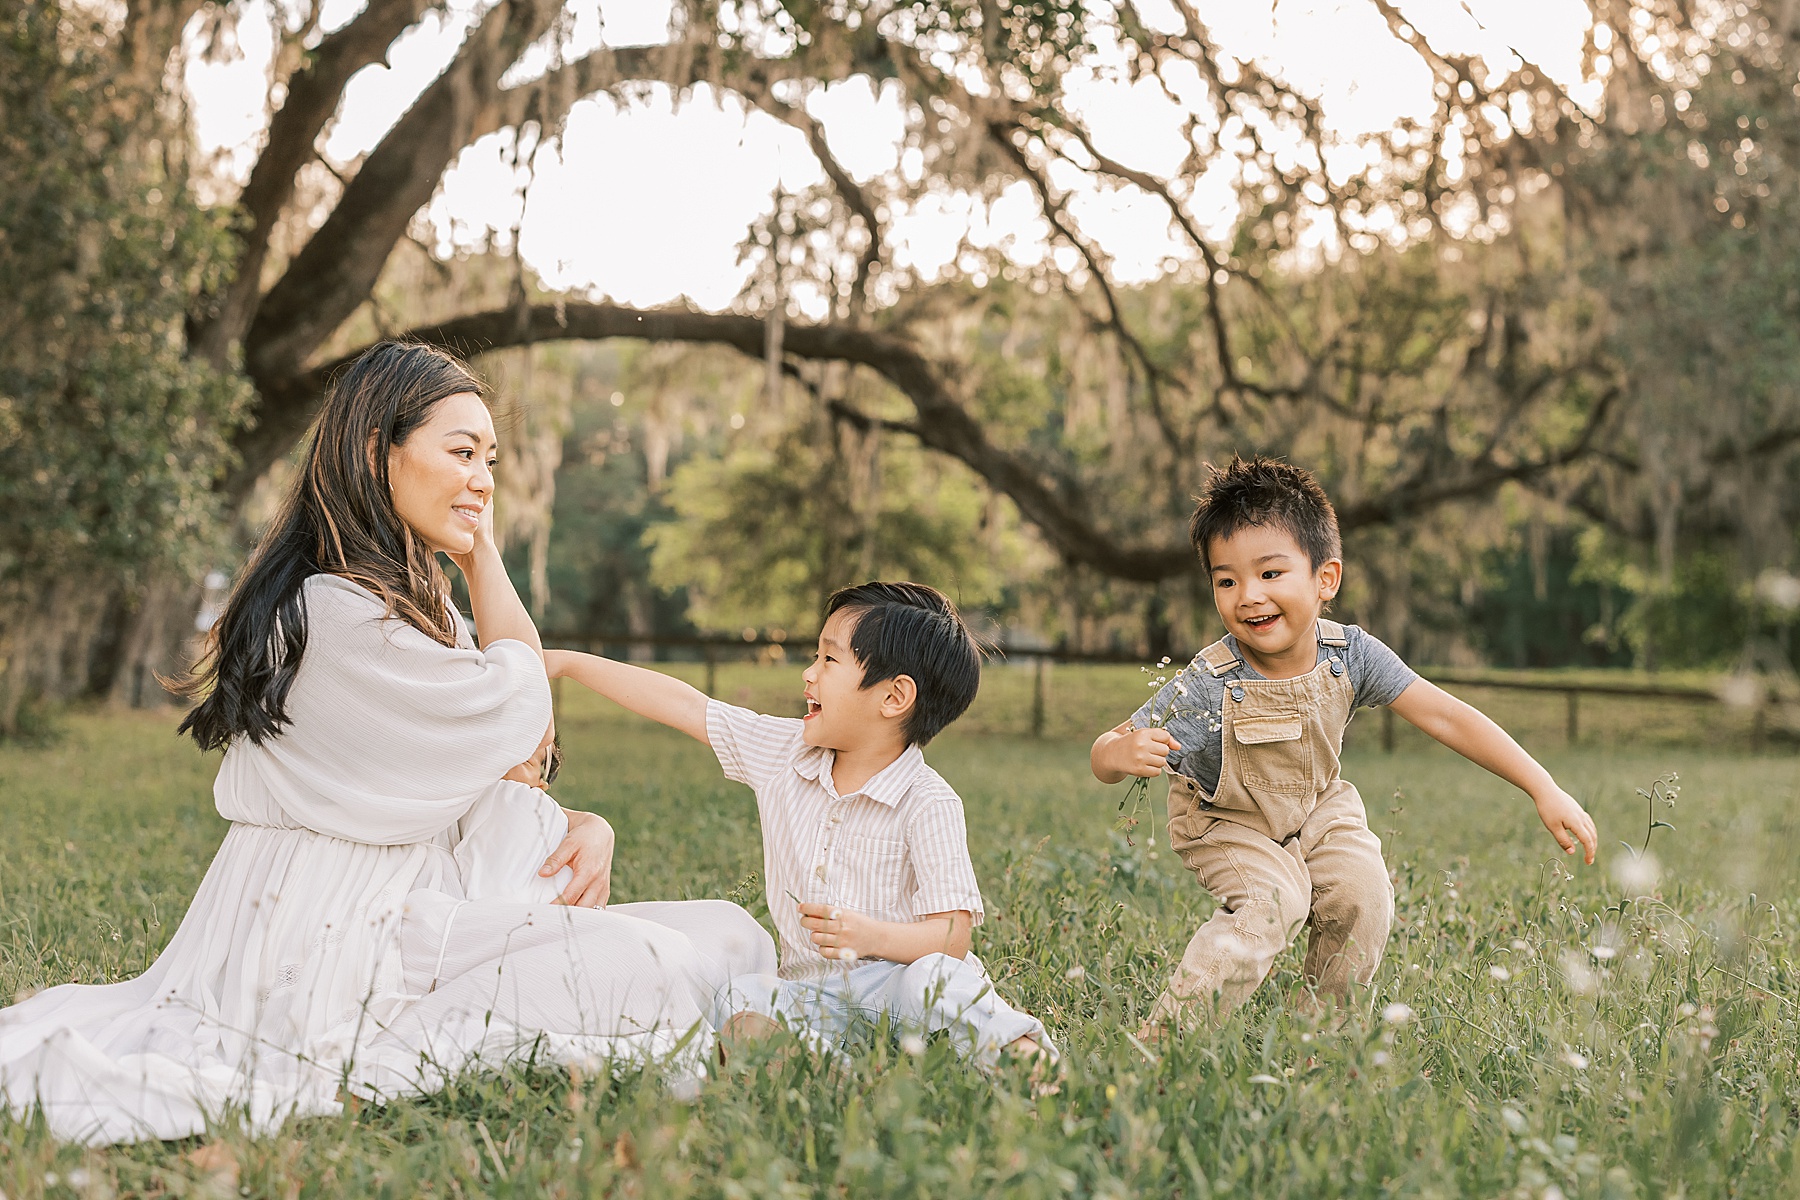 Asian woman in long white dress sitting in a flower field with two little boys